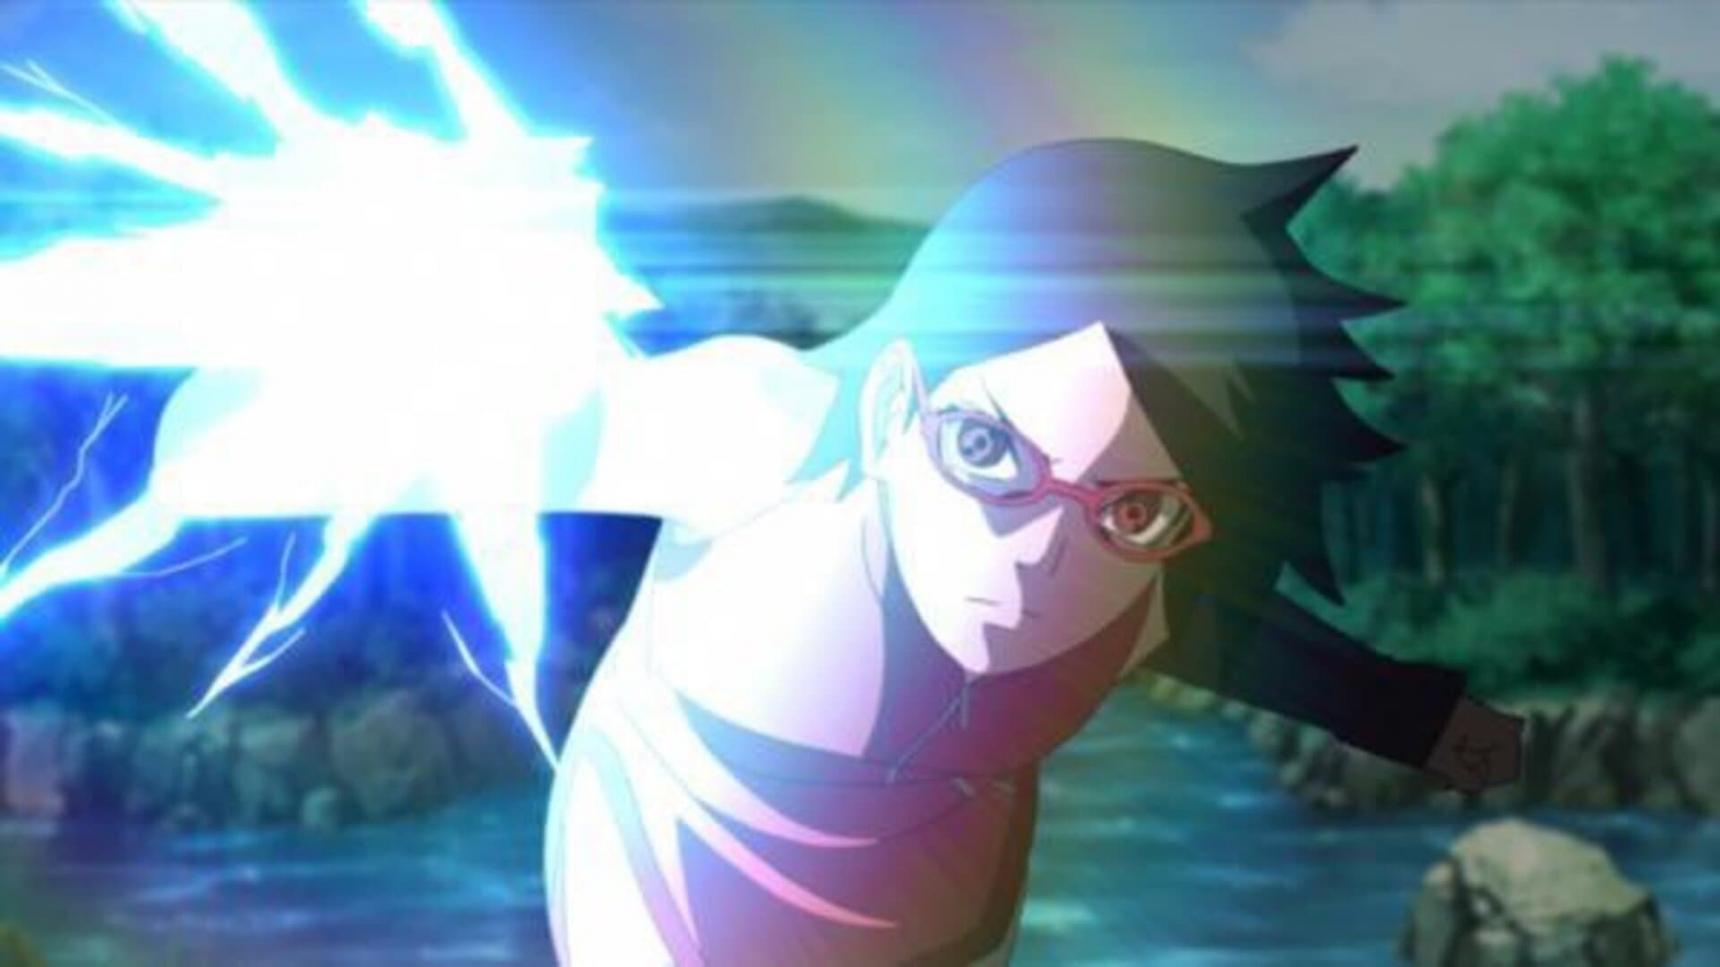 Poster del episodio 201 de Boruto: Naruto Next Generations online